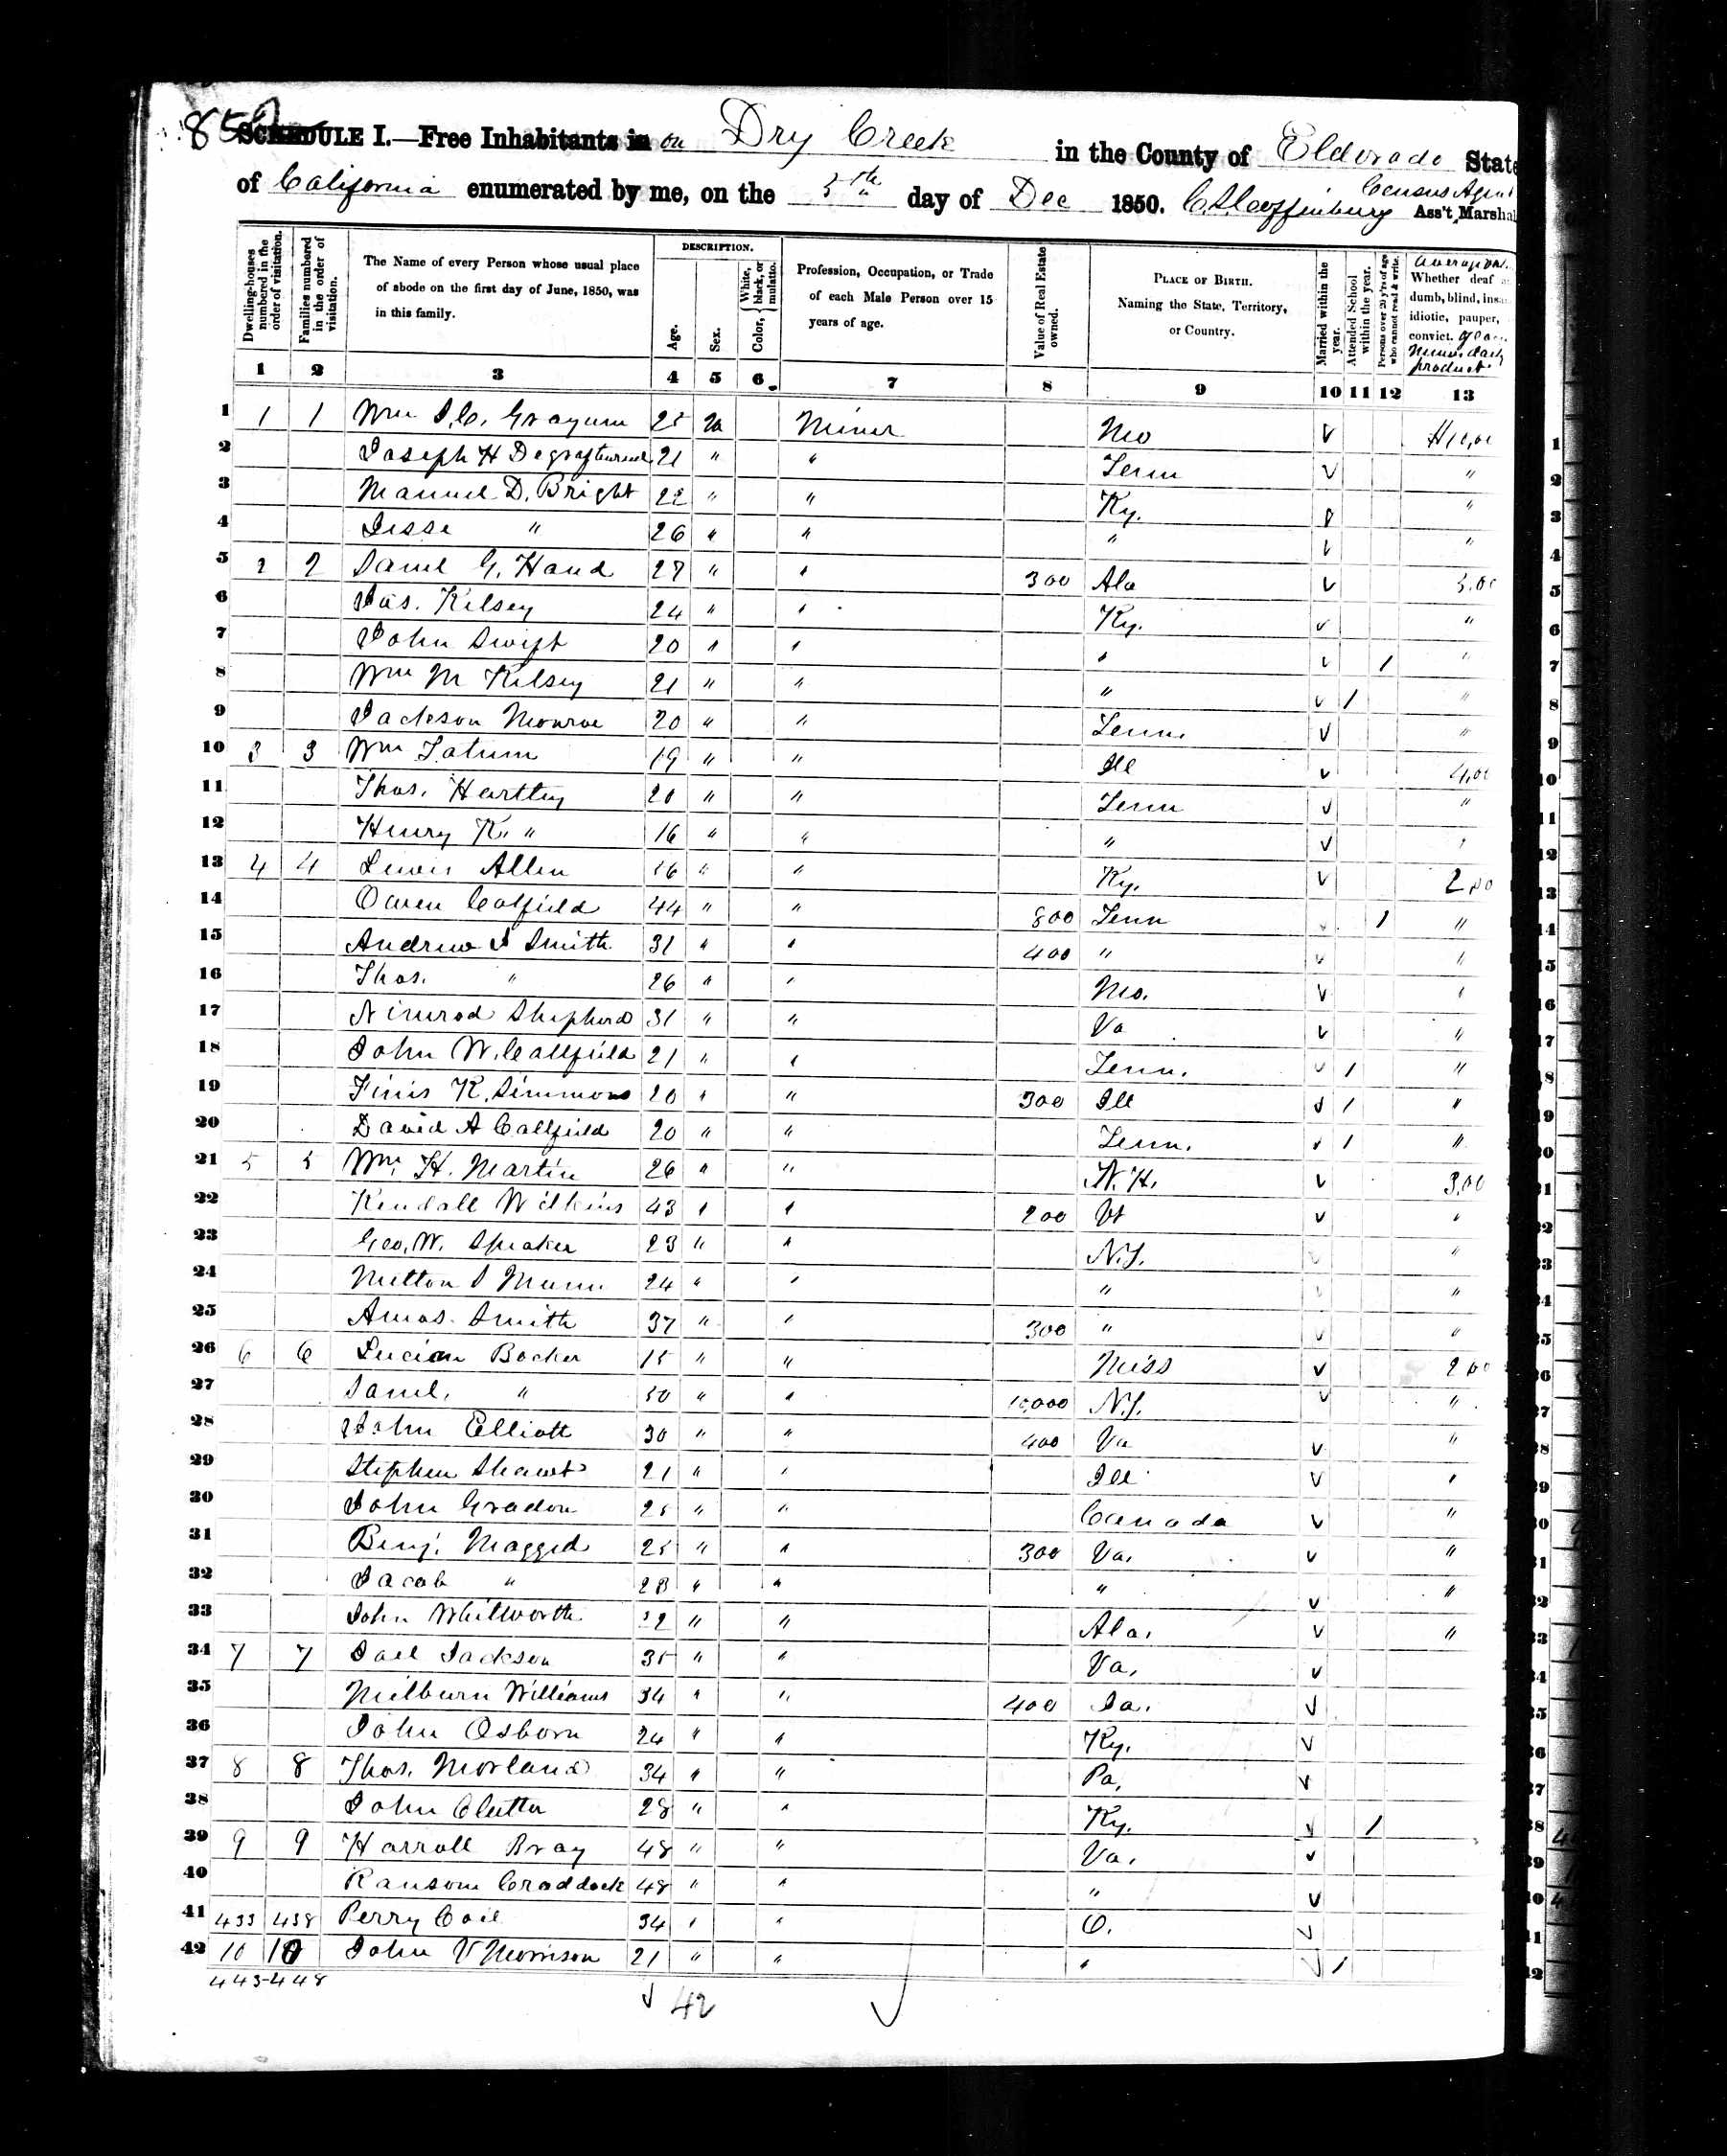 Henry K. Hartley, 1850 El Dorado County, California, census, along with William Tatum and Thomas J. Hartley